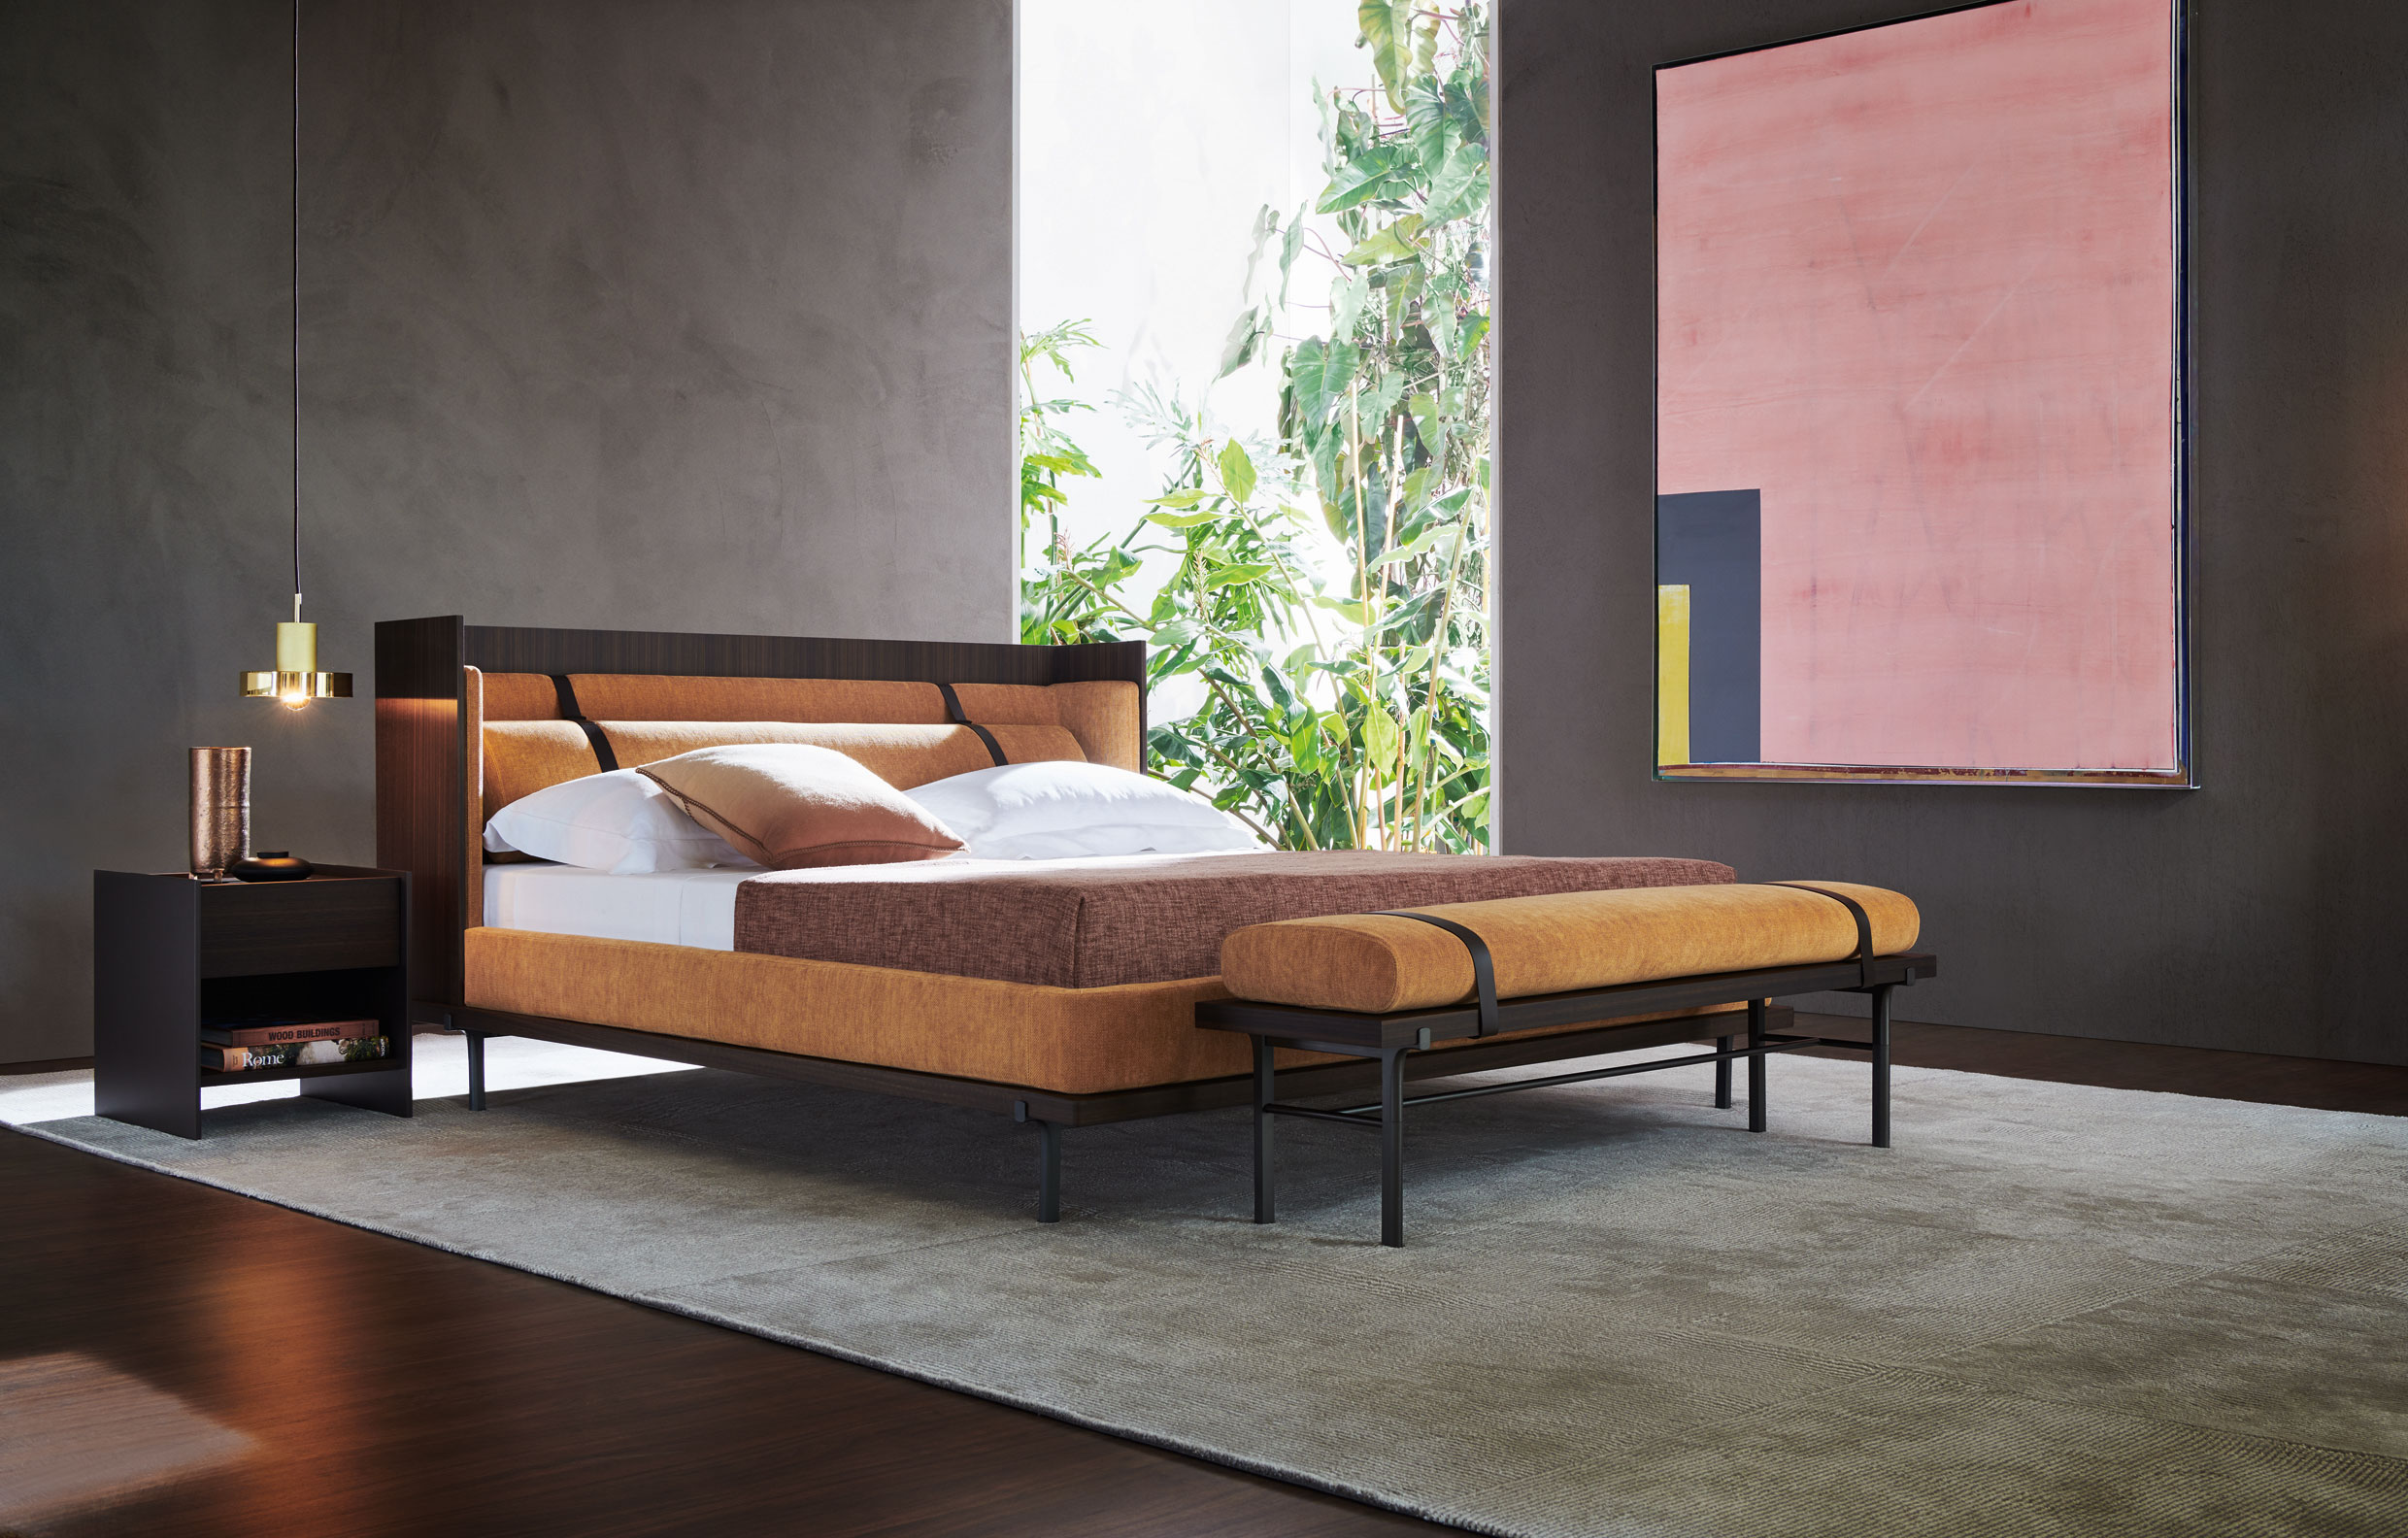 Twelve AM bed design Neri & Hu wins NYCxDESIGN Awards 2020